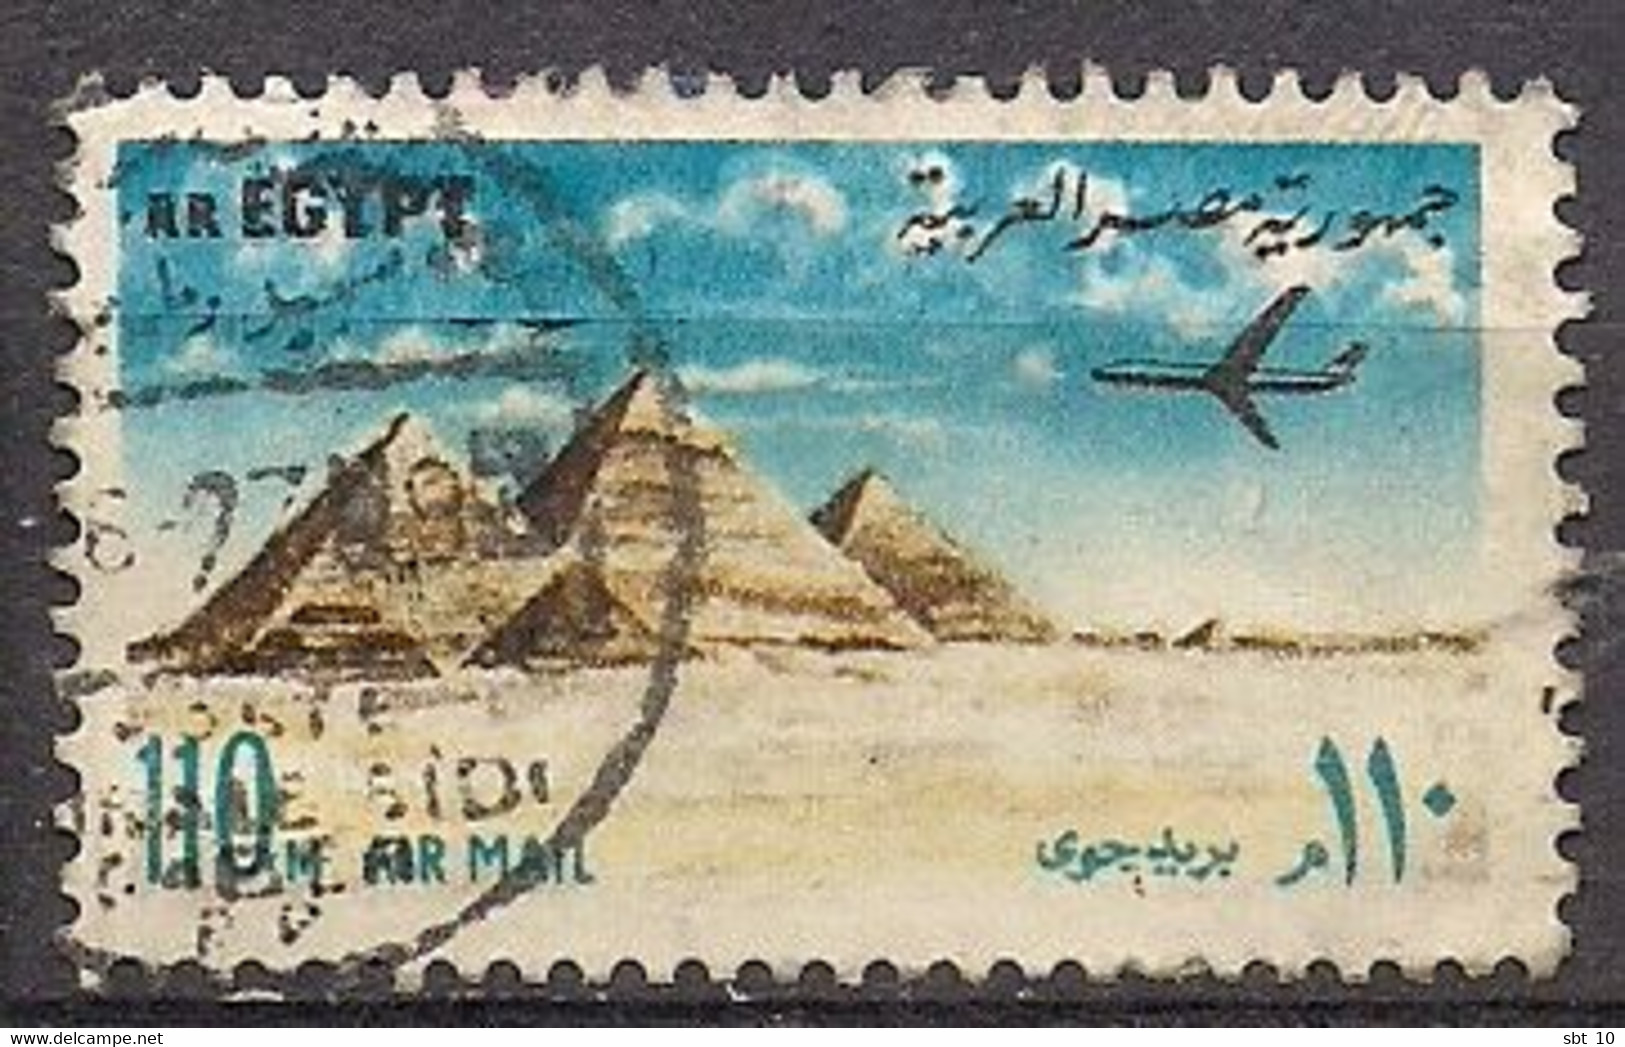 Egypt 1972 - Pyramids At Giza Scott#C148 - Used - Gebraucht